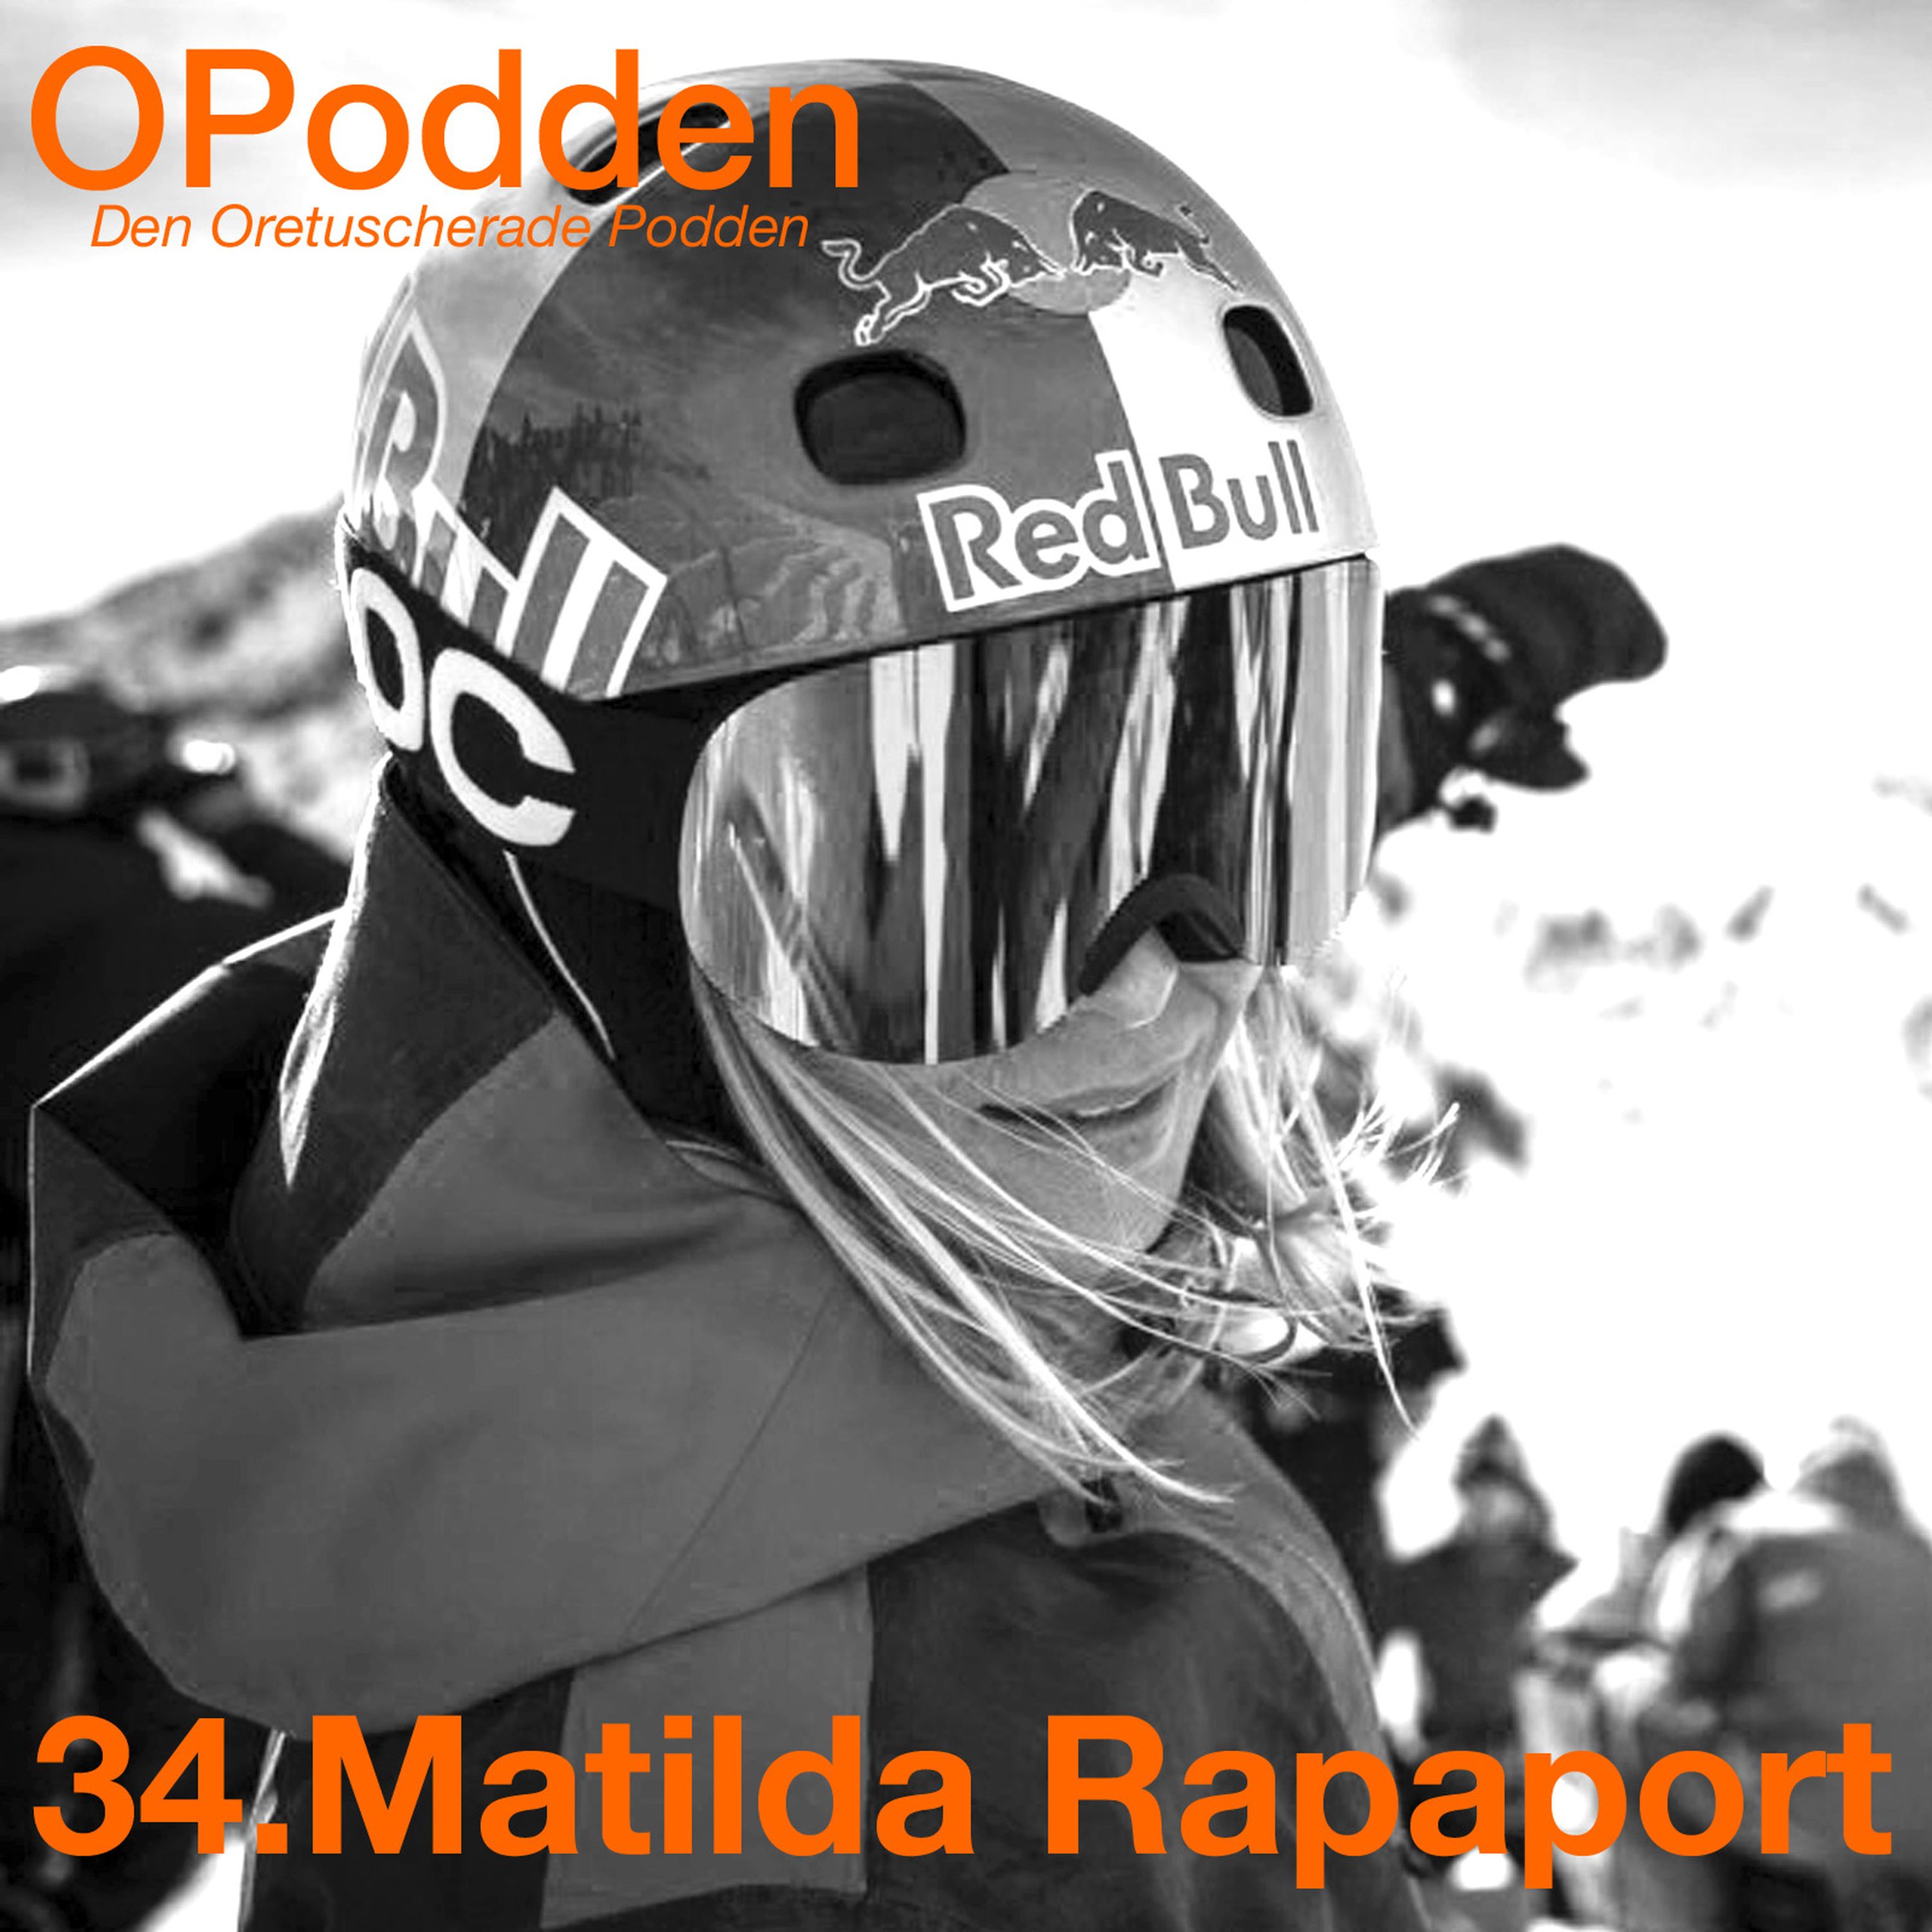 34.Matilda Rapaport